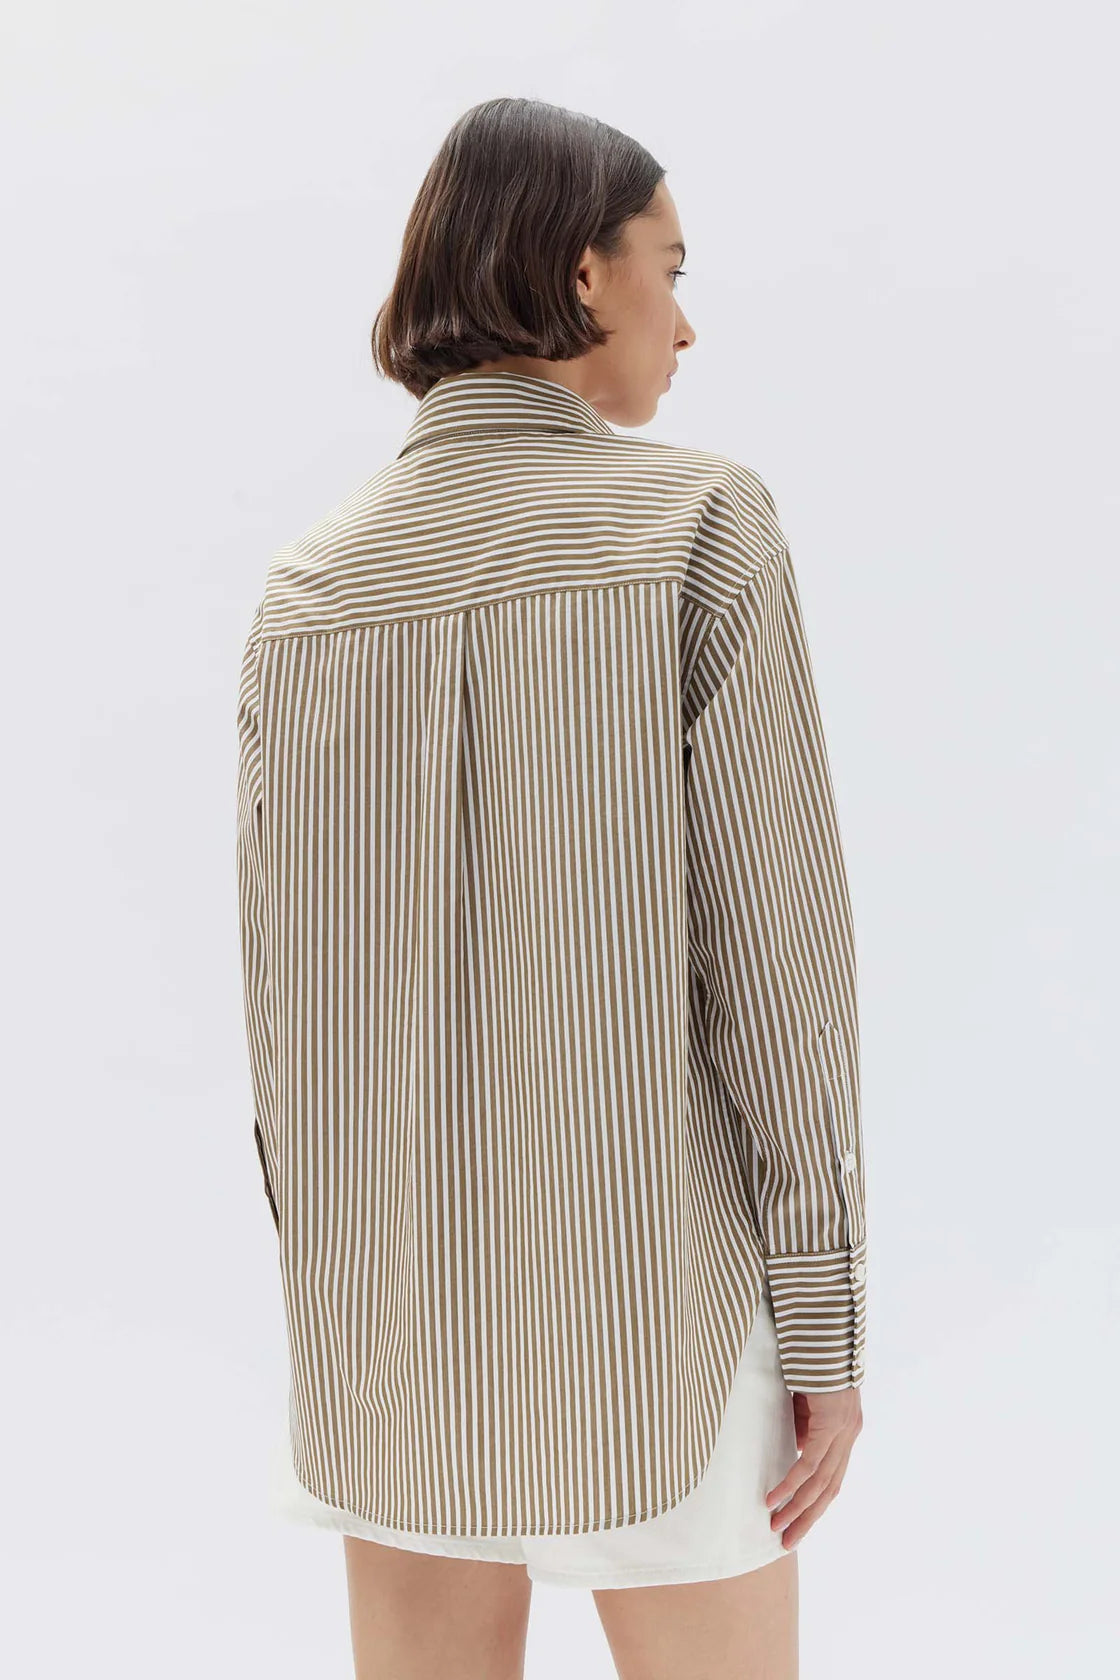 Signature Poplin Shirt | Pea & White Stripe